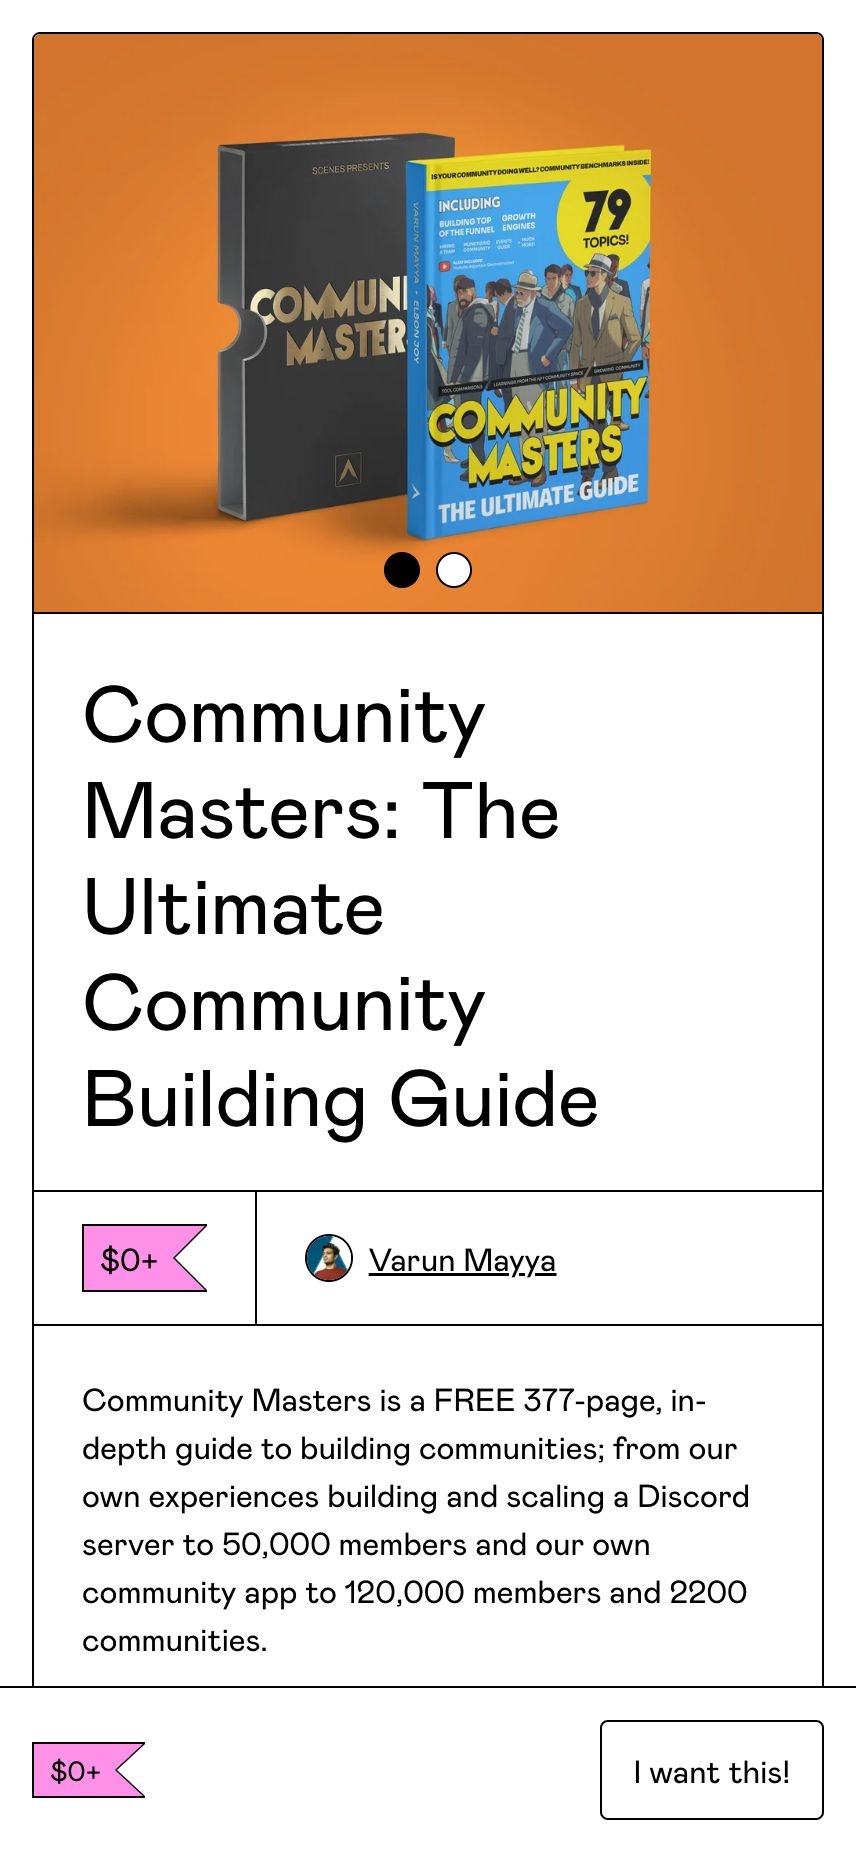 Community Masters landing page design